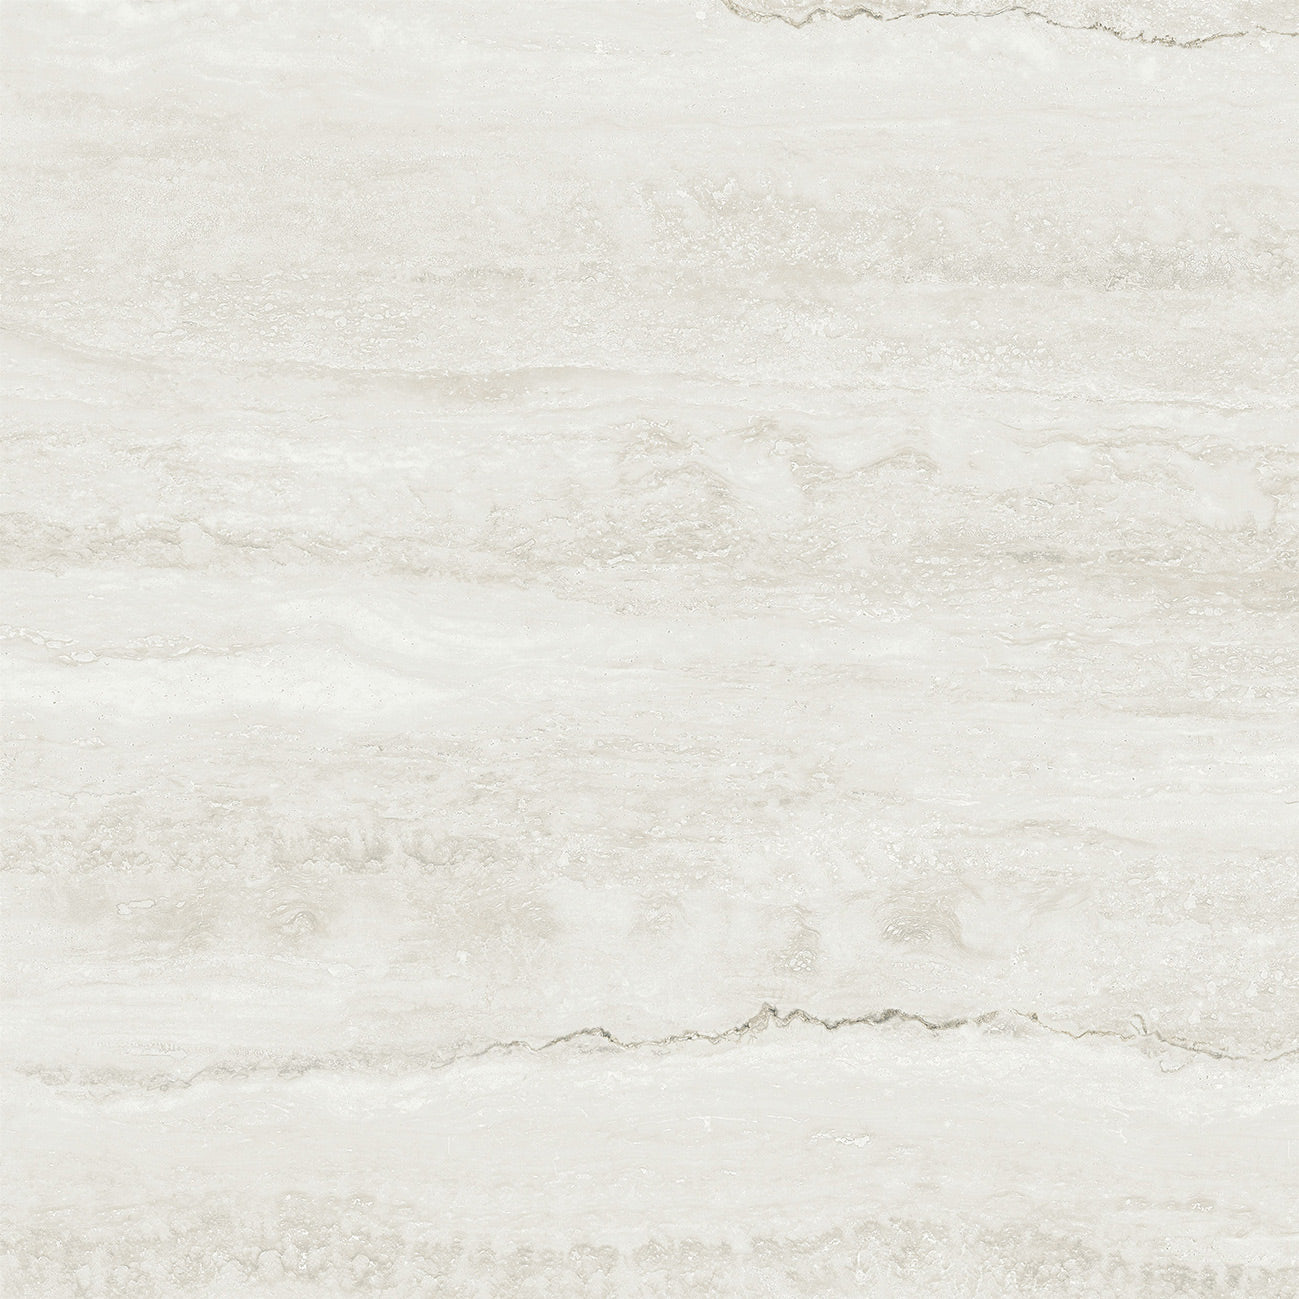 Vitra LightStone Travertine Ivory White Stone Wall And Floor Premium Porcelain Tiles 60cmx120cm